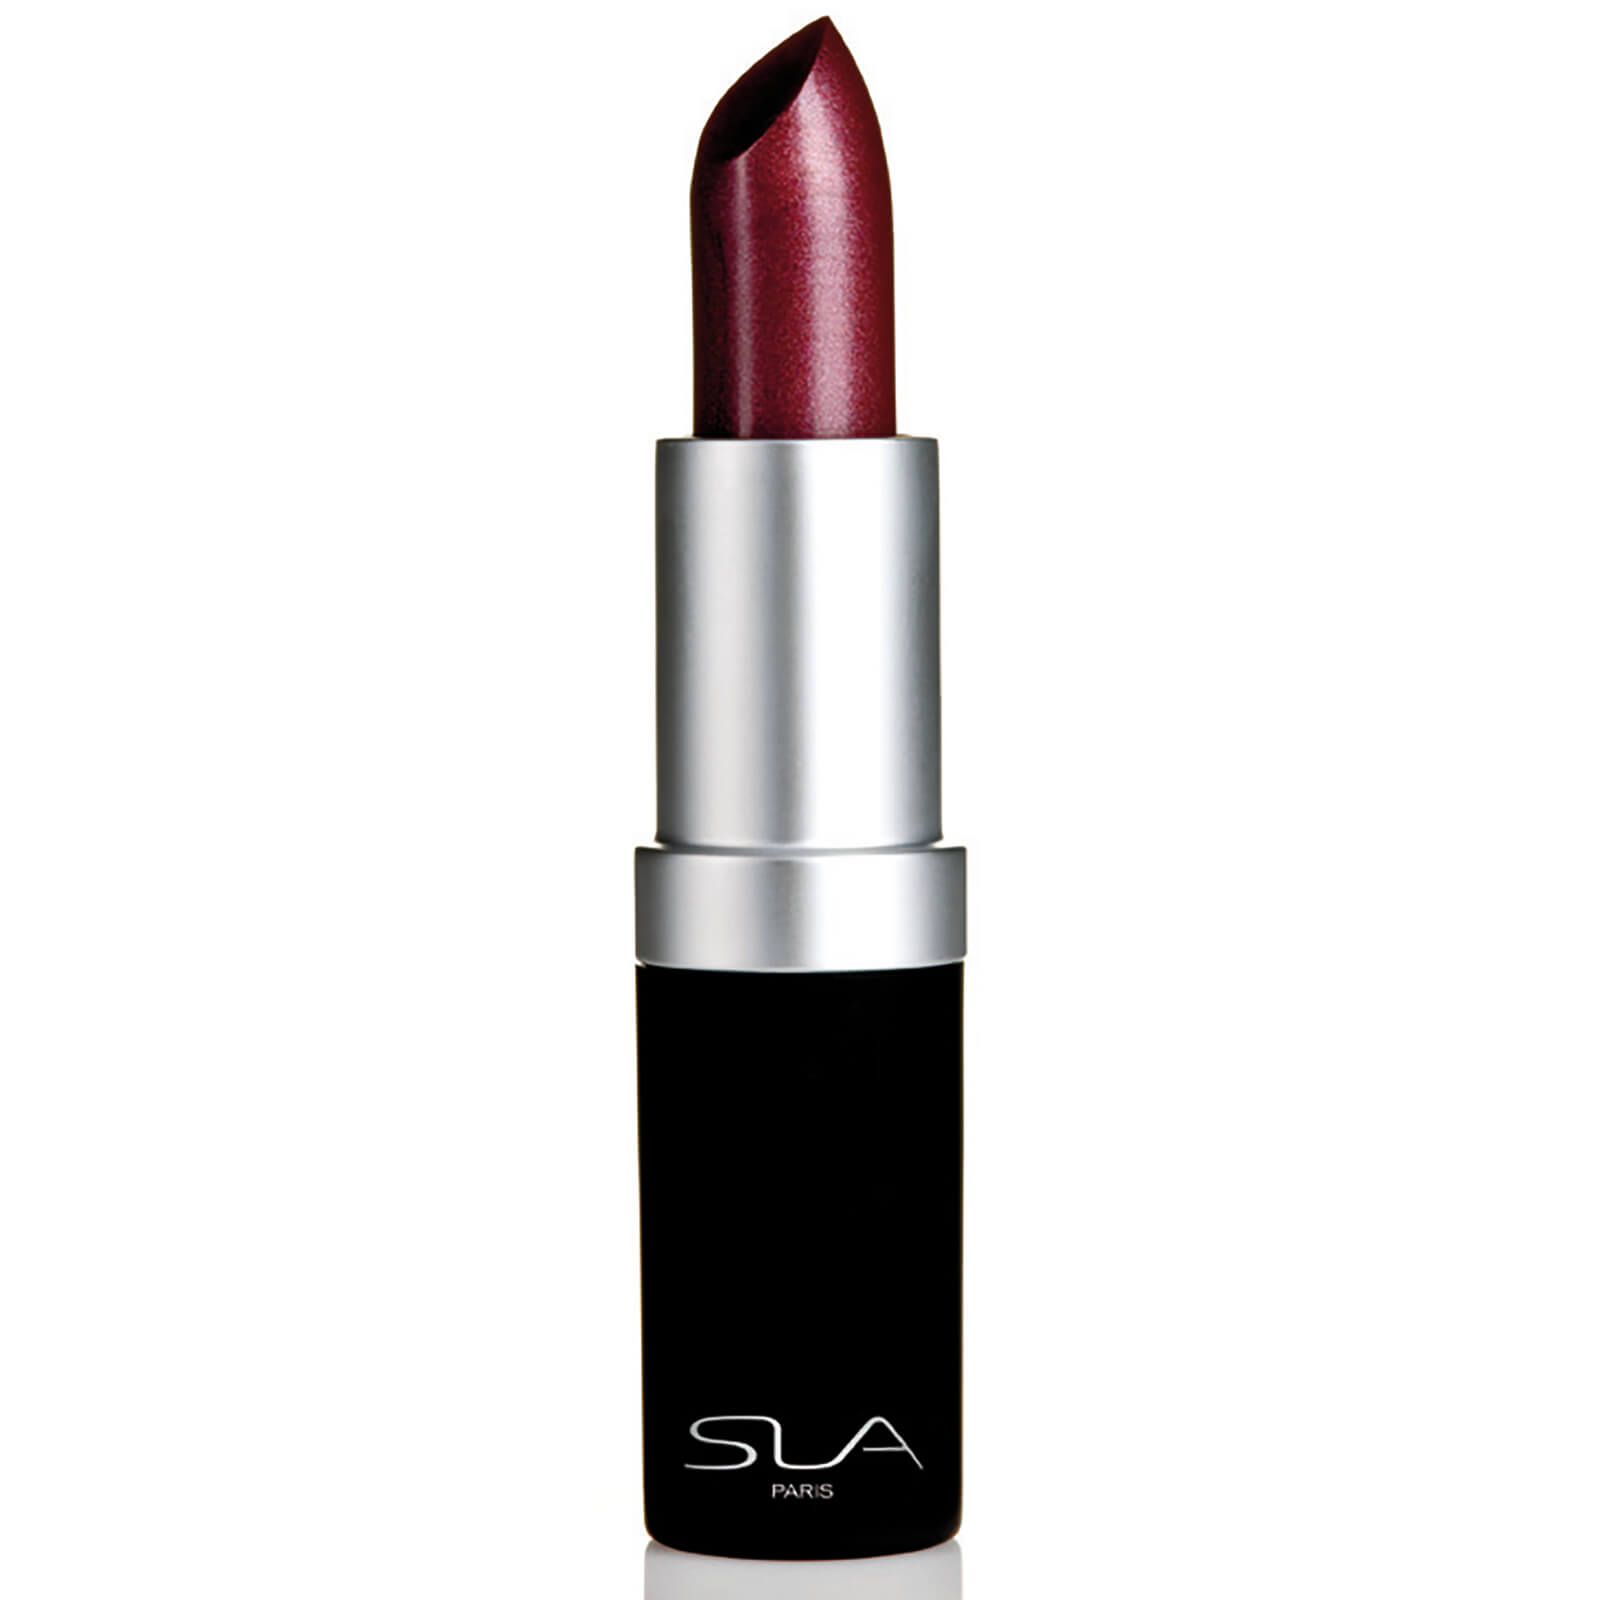 SLA Paris Natural Perfect Lipstick 3.5g (Various Shades) - Dark Rose Pink